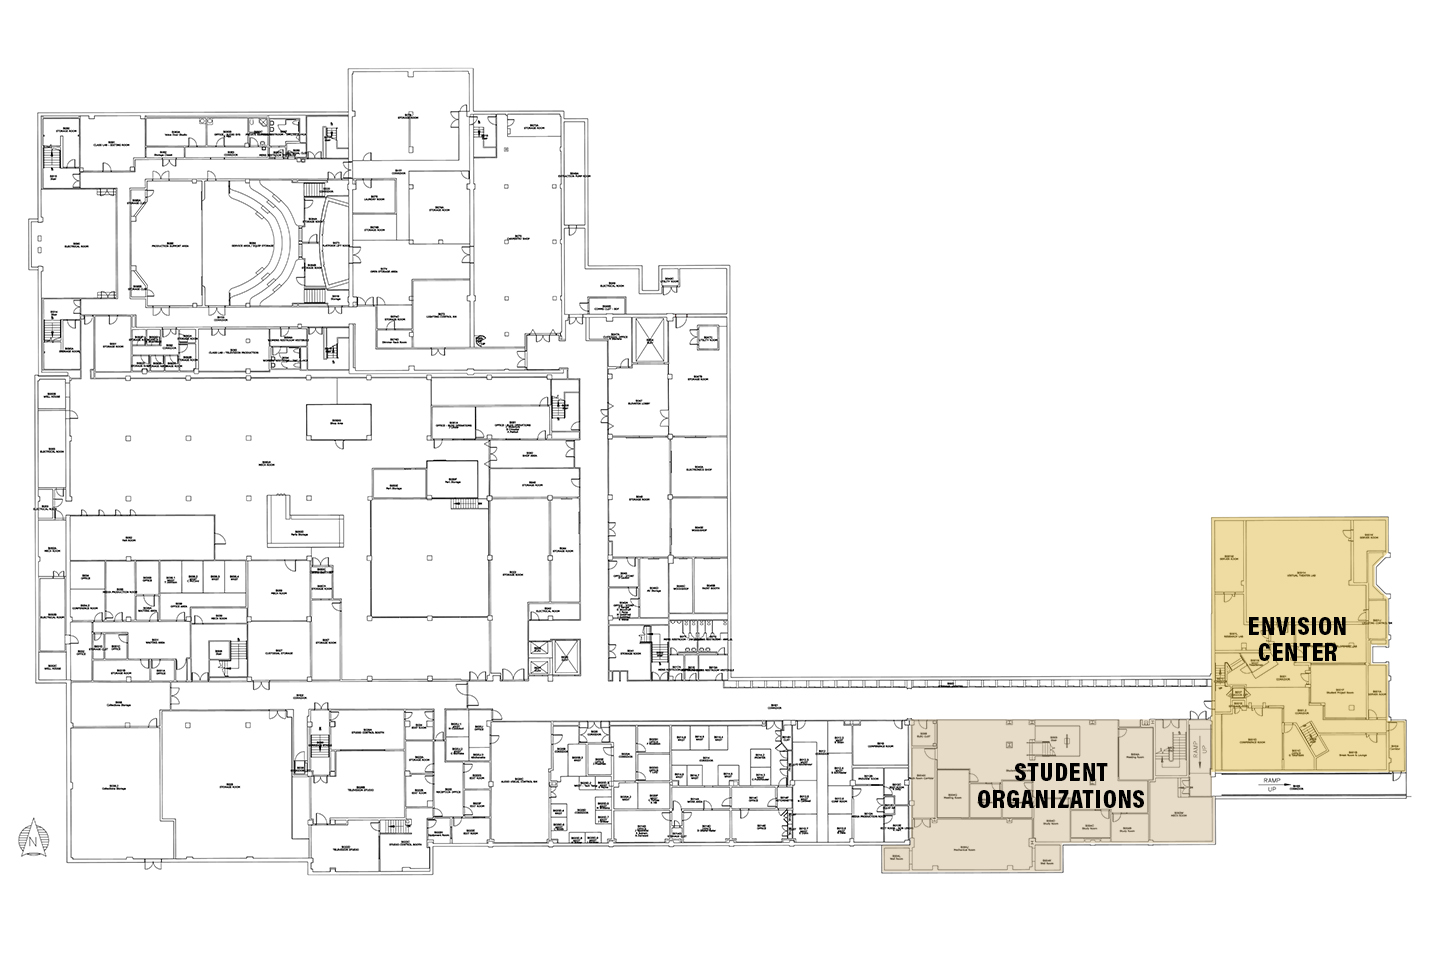 Stewart Center Basement floor plan layout